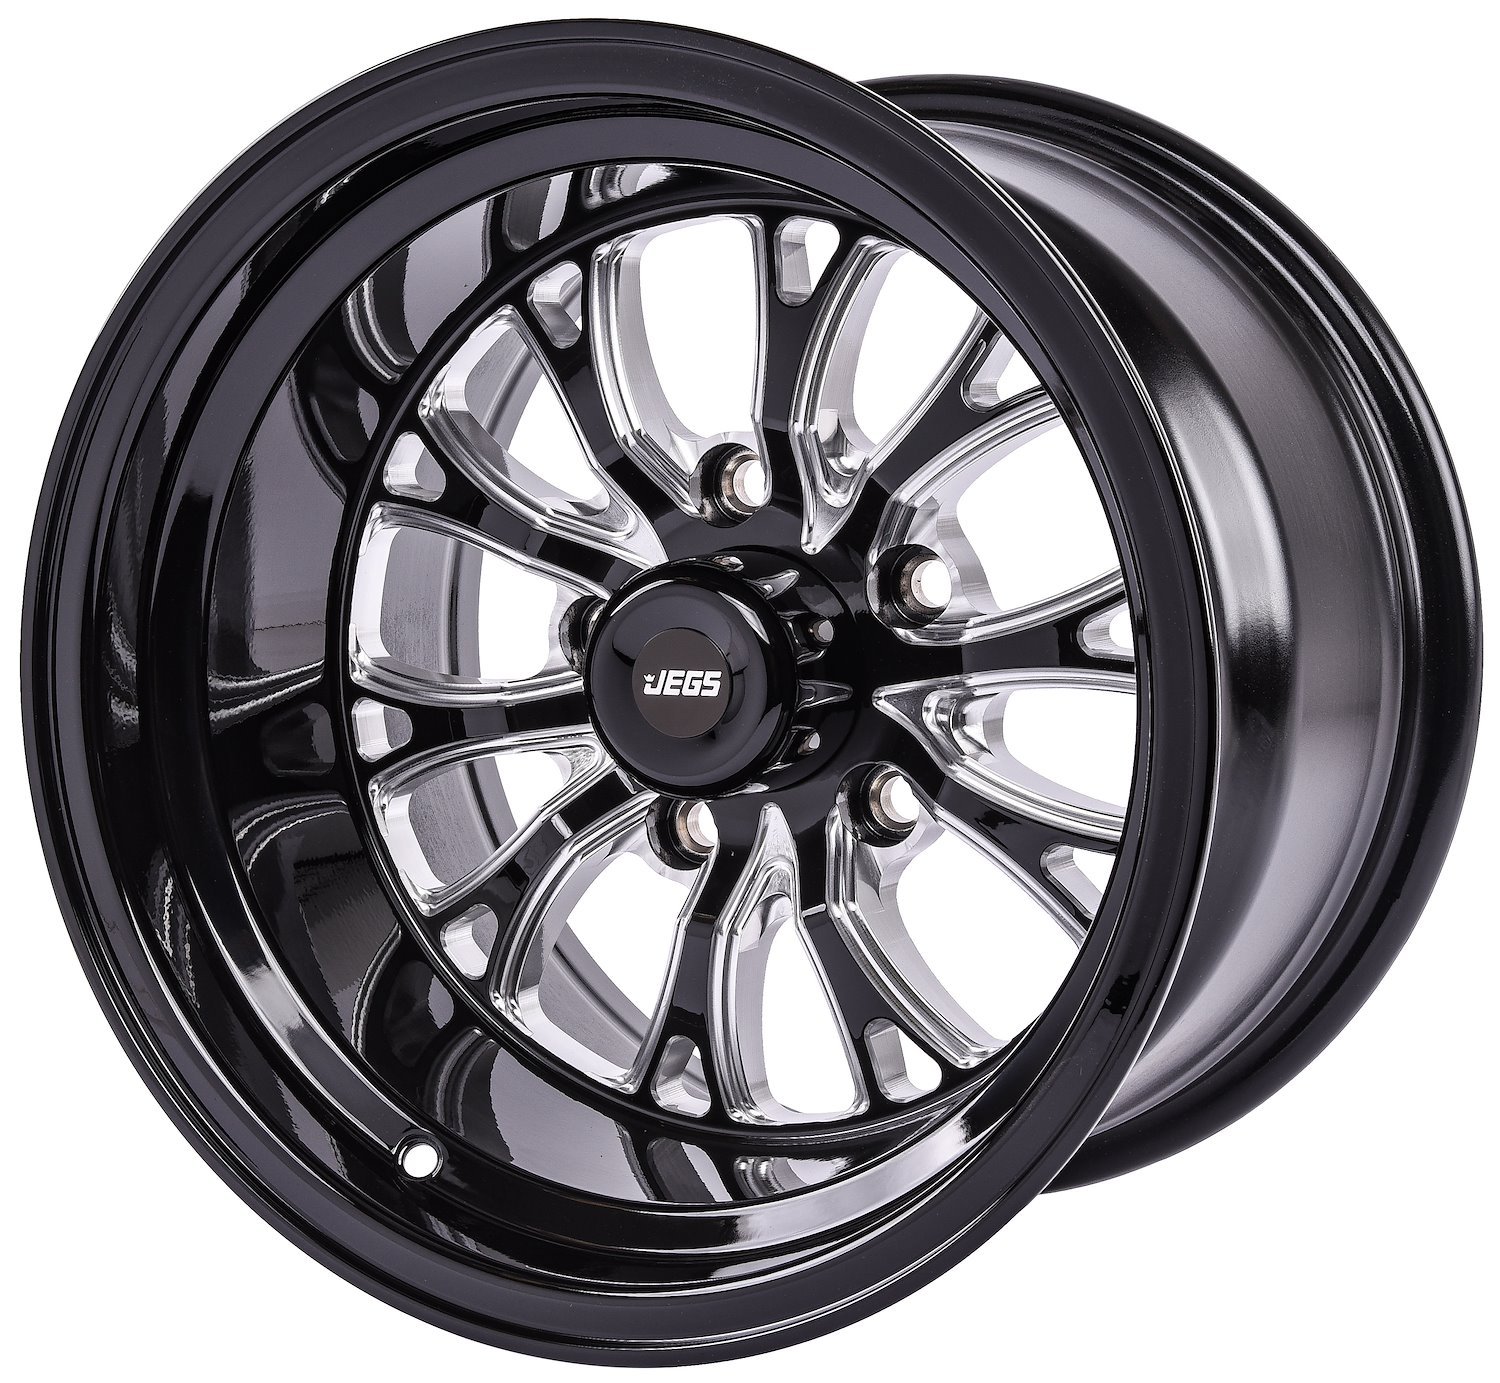 SSR Spike Wheel [Size: 15" x 10"] Gloss Black